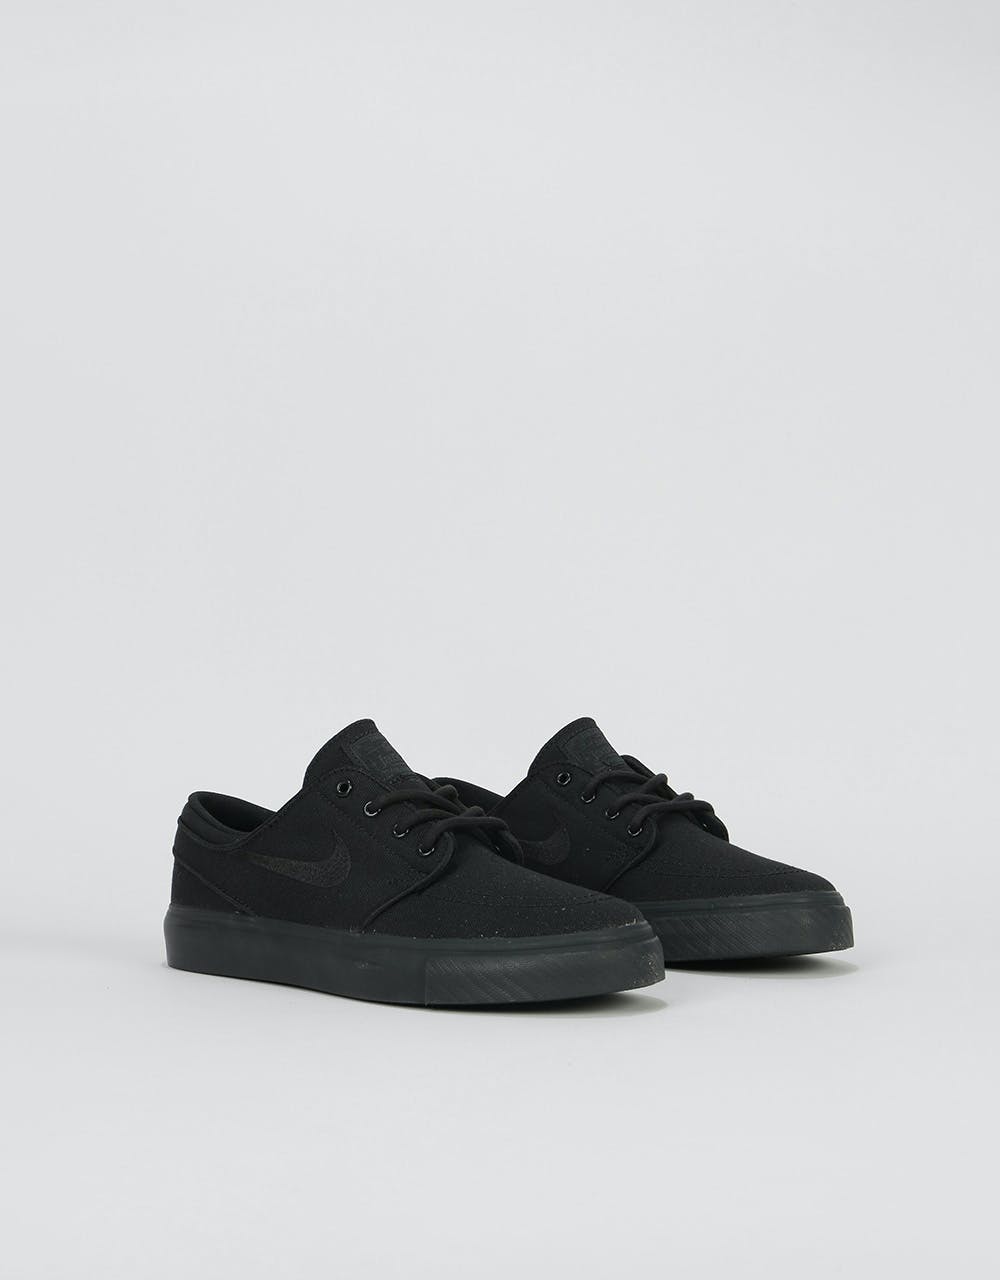 Nike SB Stefan Janoski Youth Skate Shoes - Black/Black/Anthracite